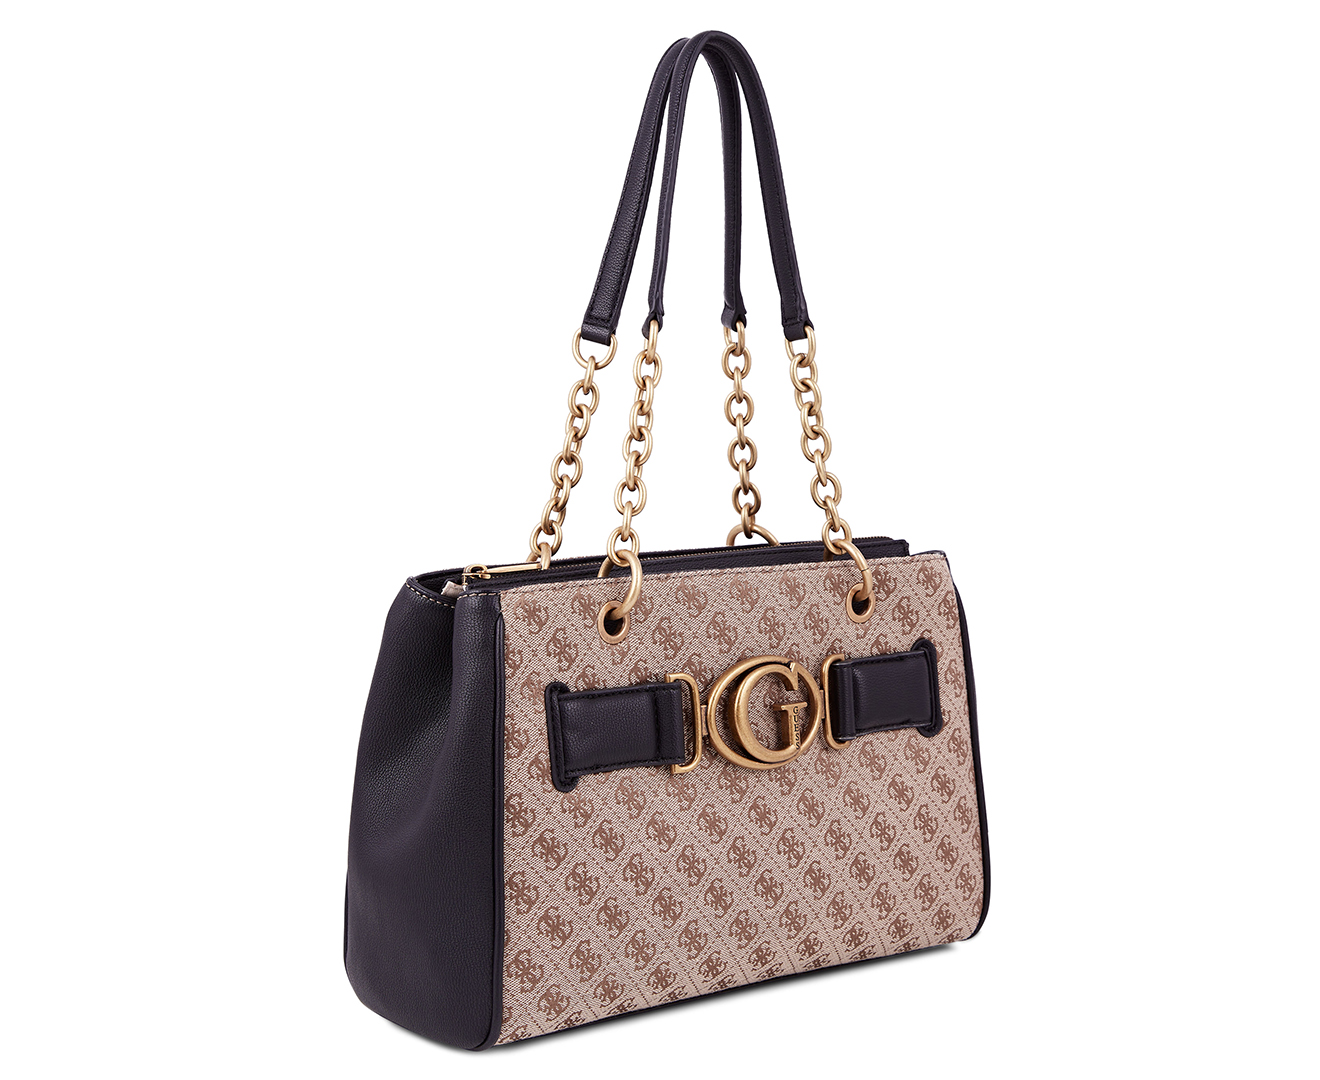 GUESS Aviana Luxury Satchel Bag - Latte/Black | M.catch.com.au